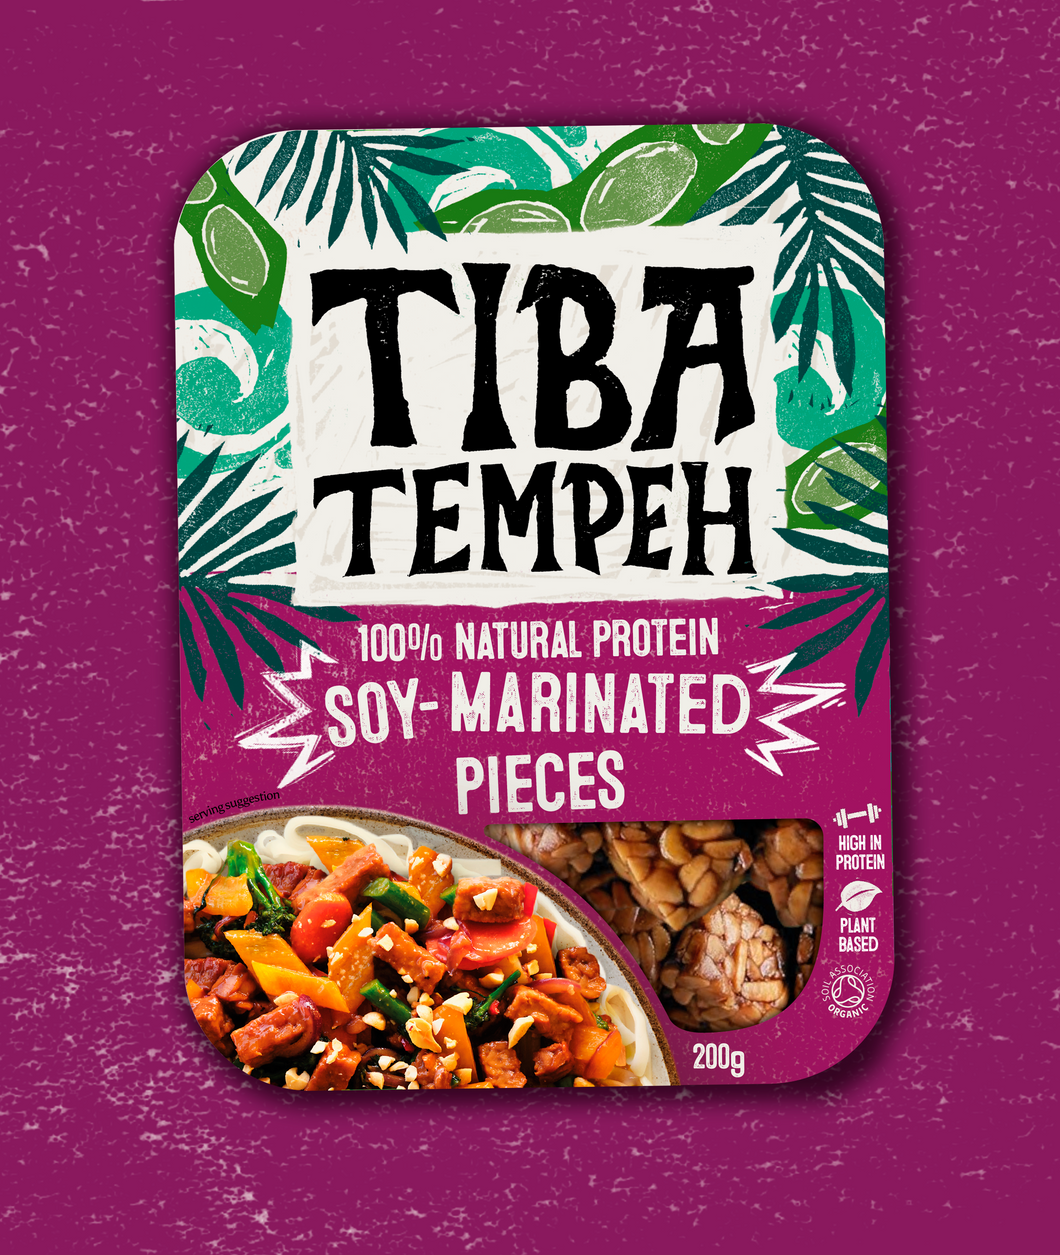 Tiba Tempeh Soy-Marinated Pieces 200g